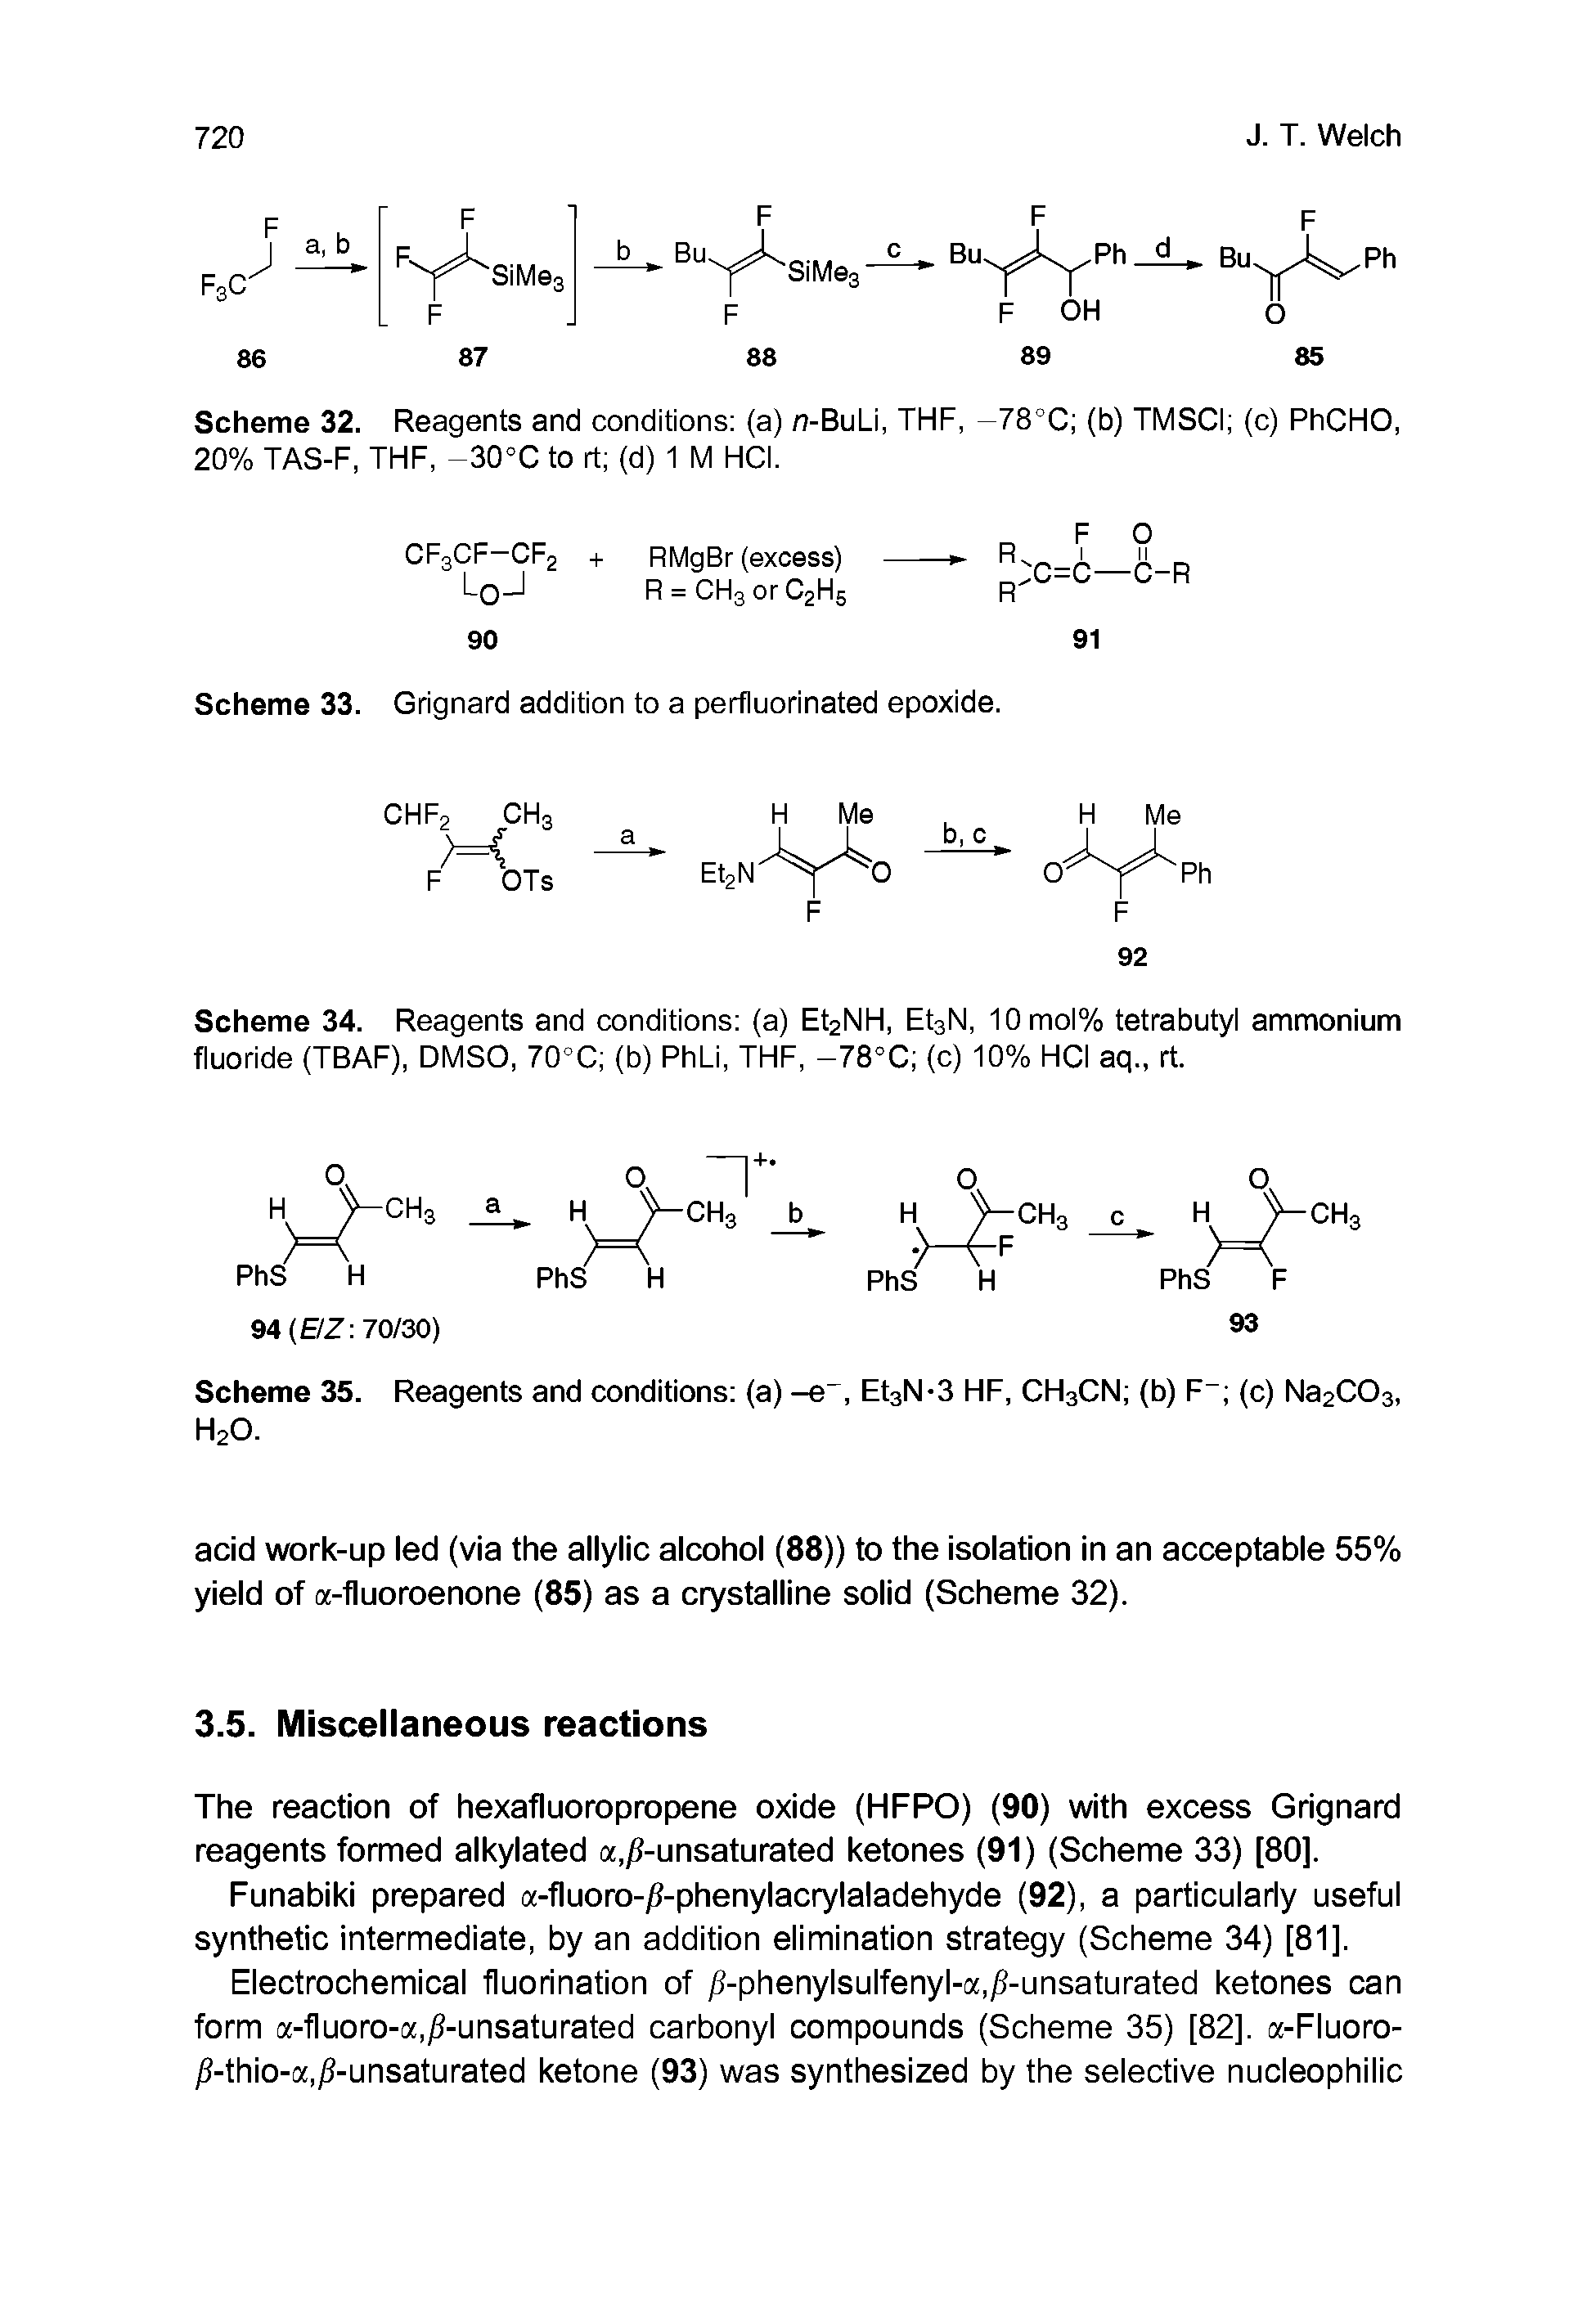 Scheme 34. Reagents and conditions (a) Et2NH, EtsN, 10mol% tetrabutyl ammonium fluoride (TBAF), DMSO, 70°C (b) PhLi, THF, -78°C (c) 10% HCI aq rt.